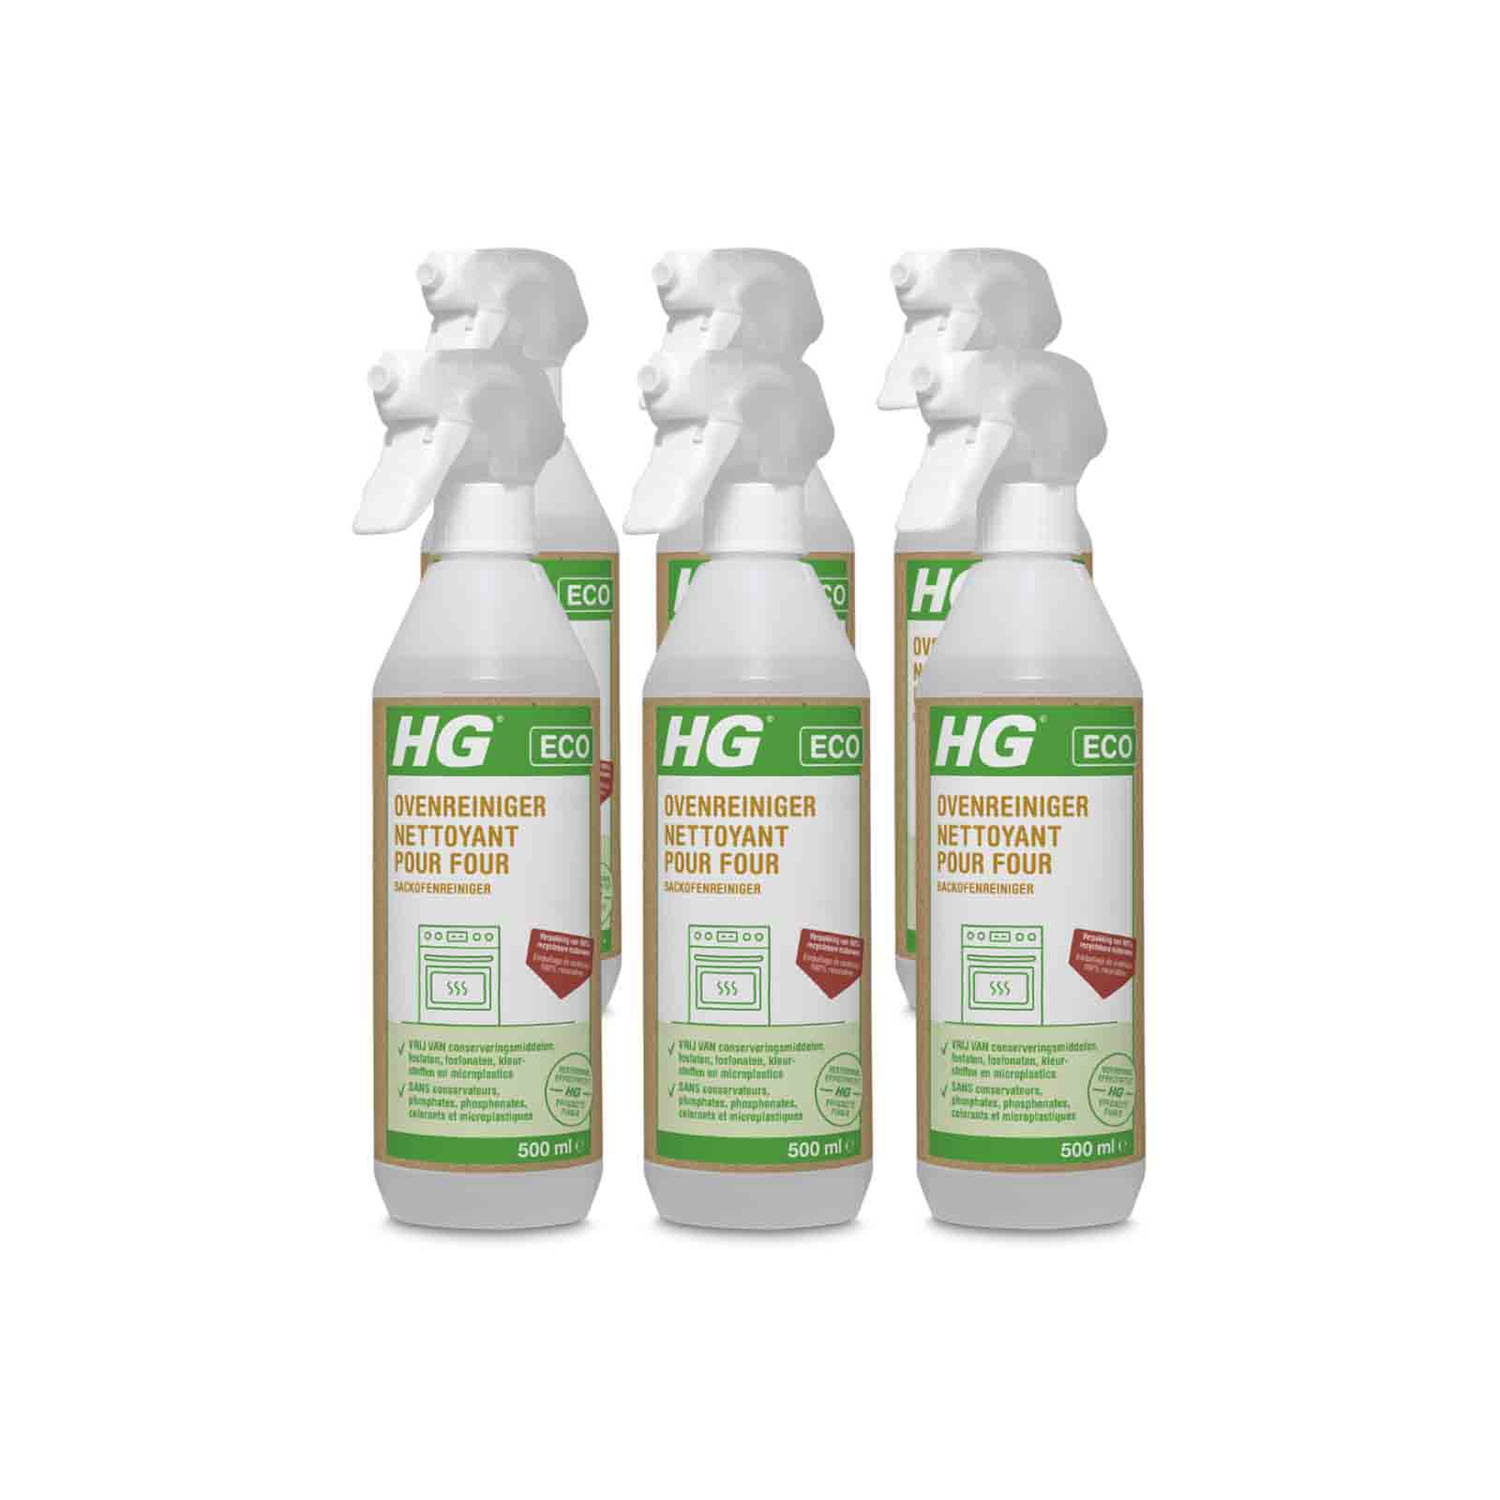 HG ECO ovenreiniger 500 ml - 6 stuks